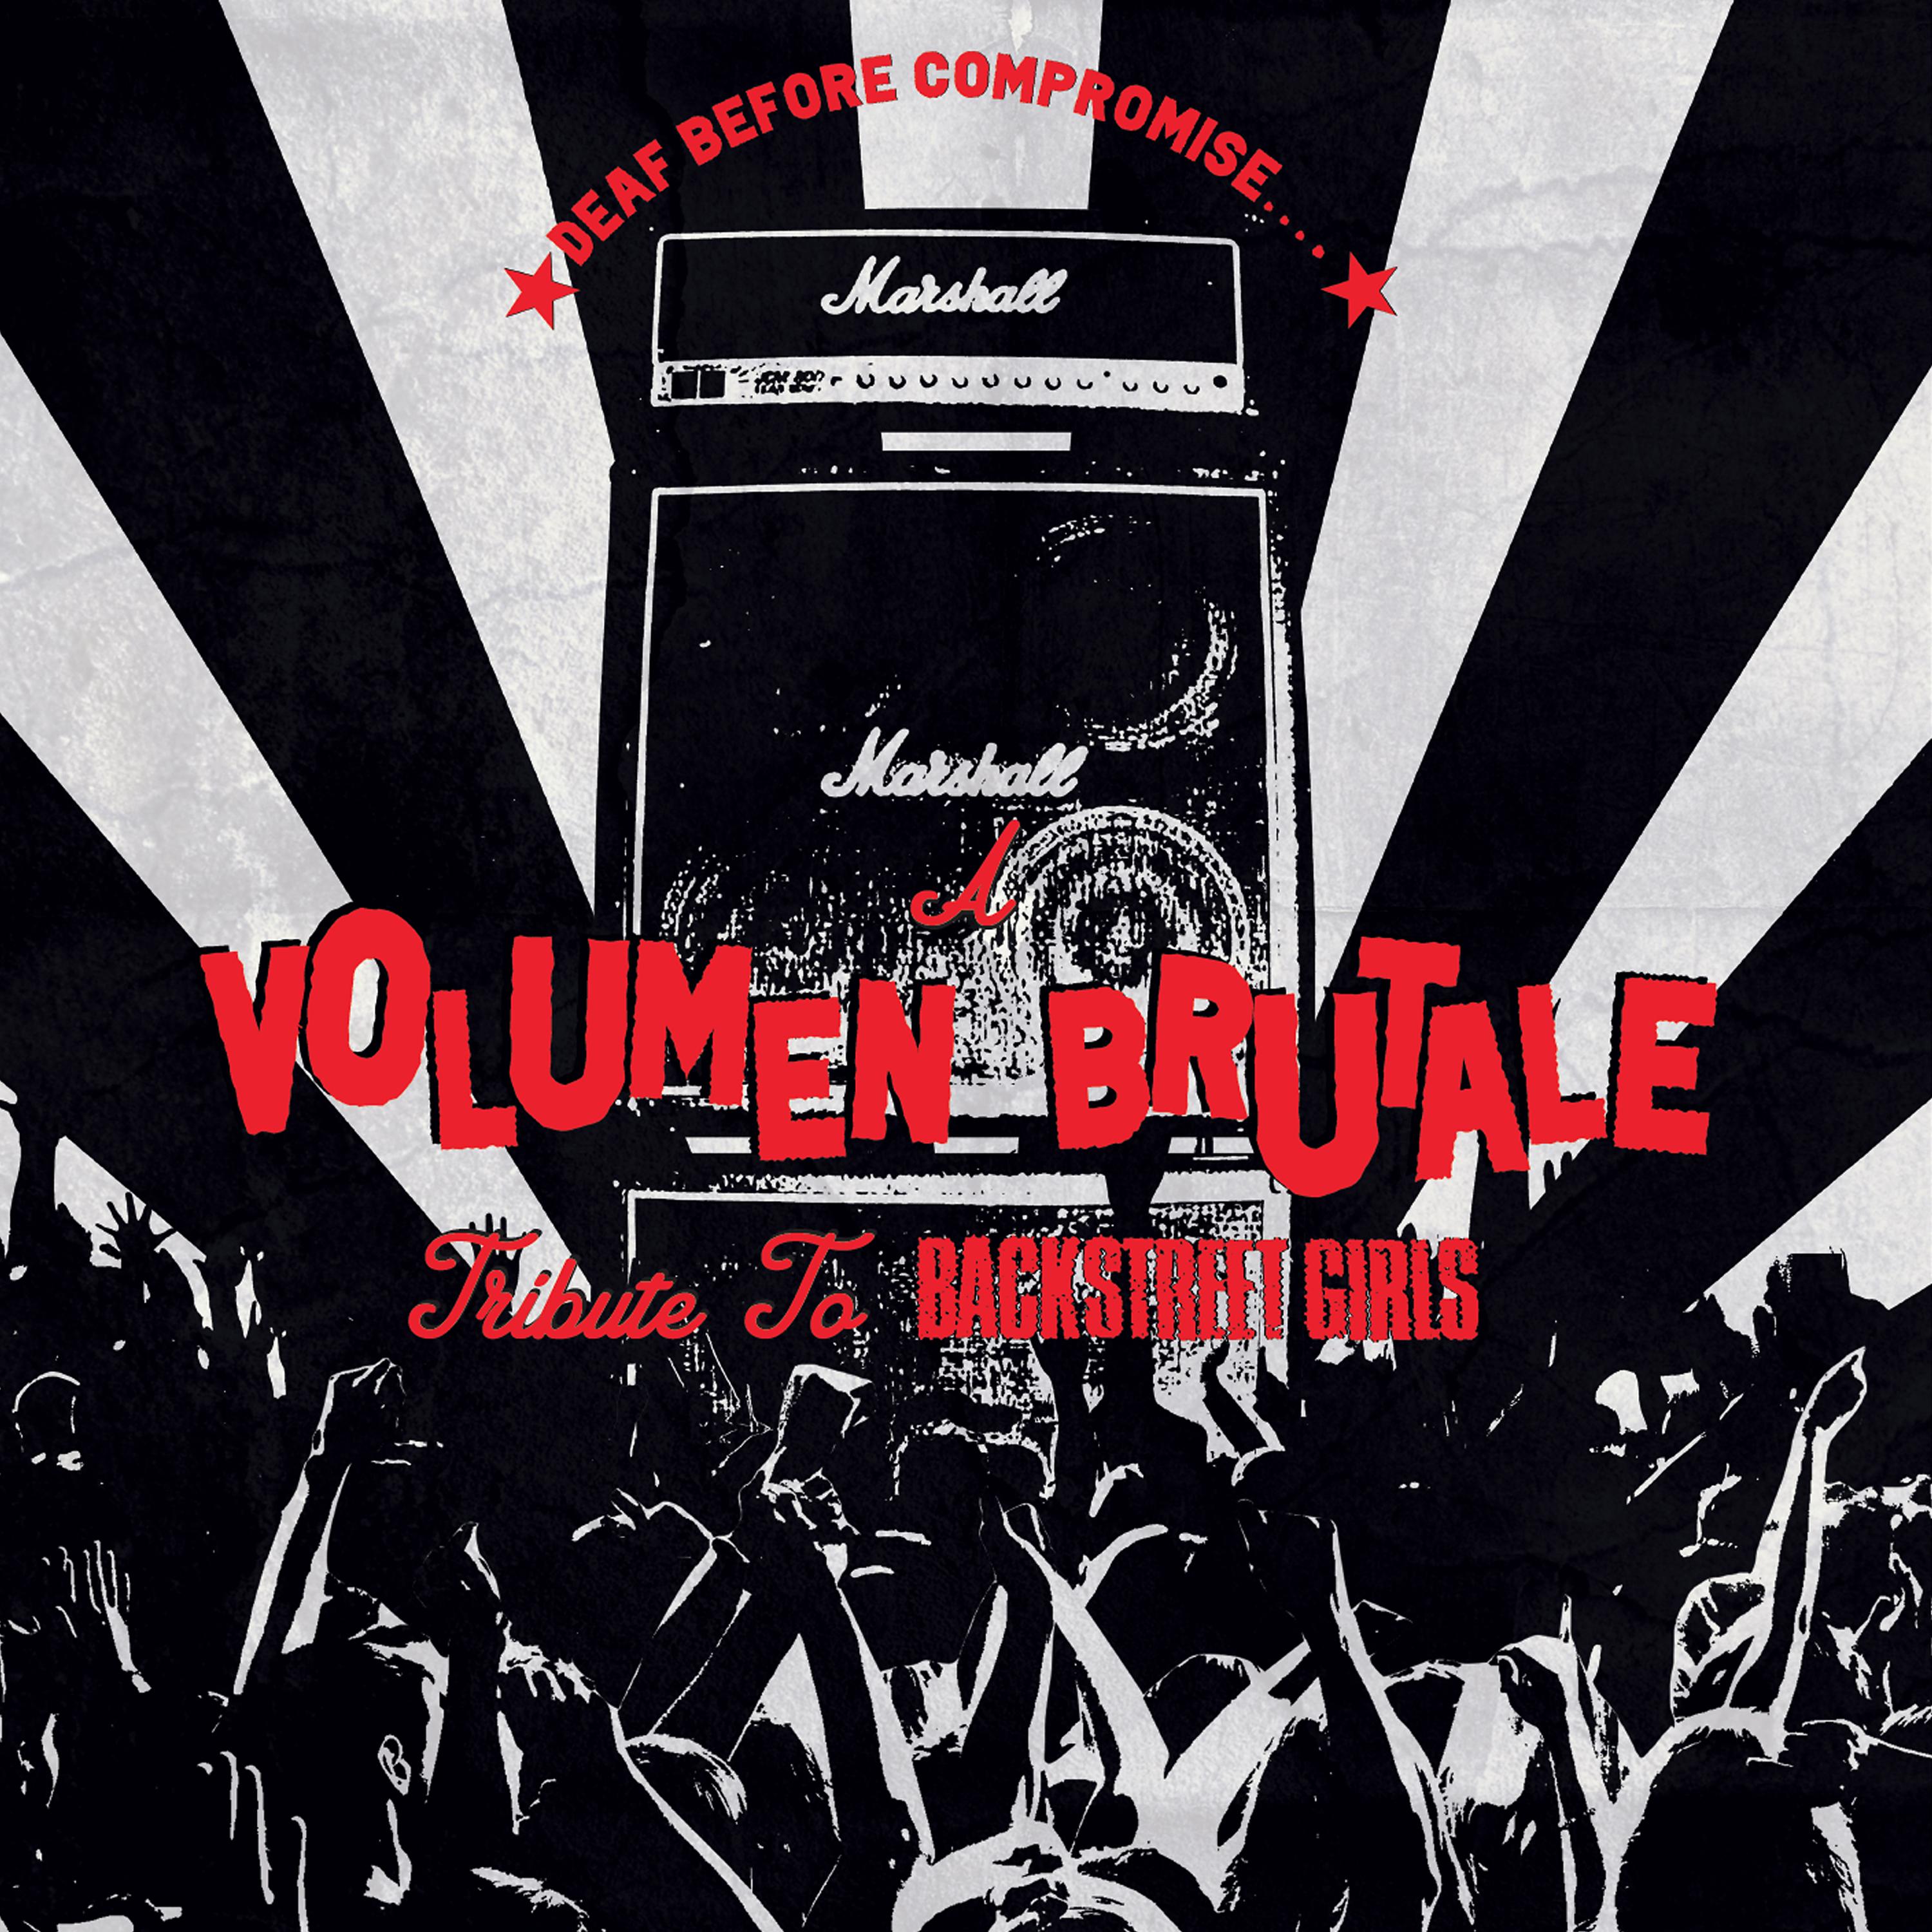 Постер альбома Deaf Before Compromise...A Volumen Brutale Tribute to Backstreet Girls